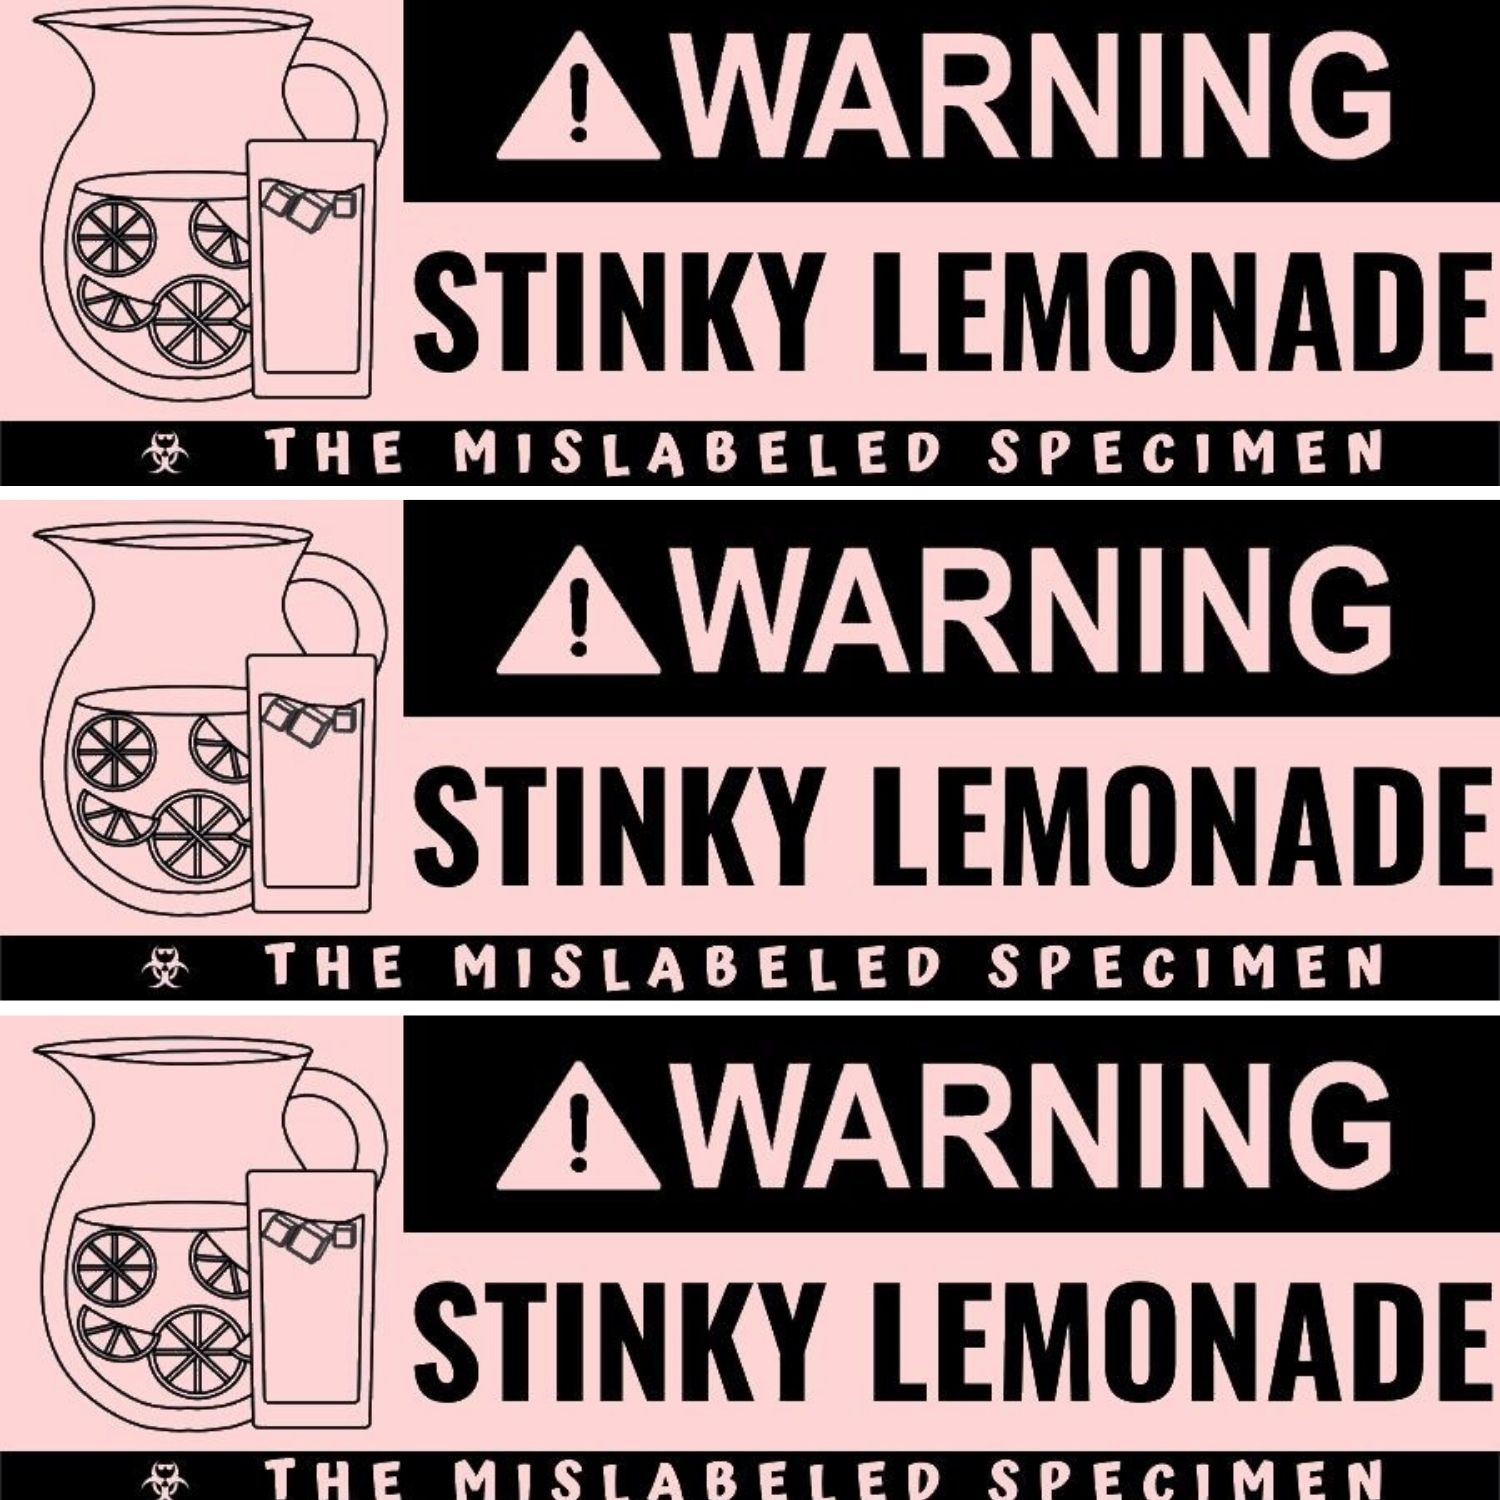 Warning: Stinky Lemonade